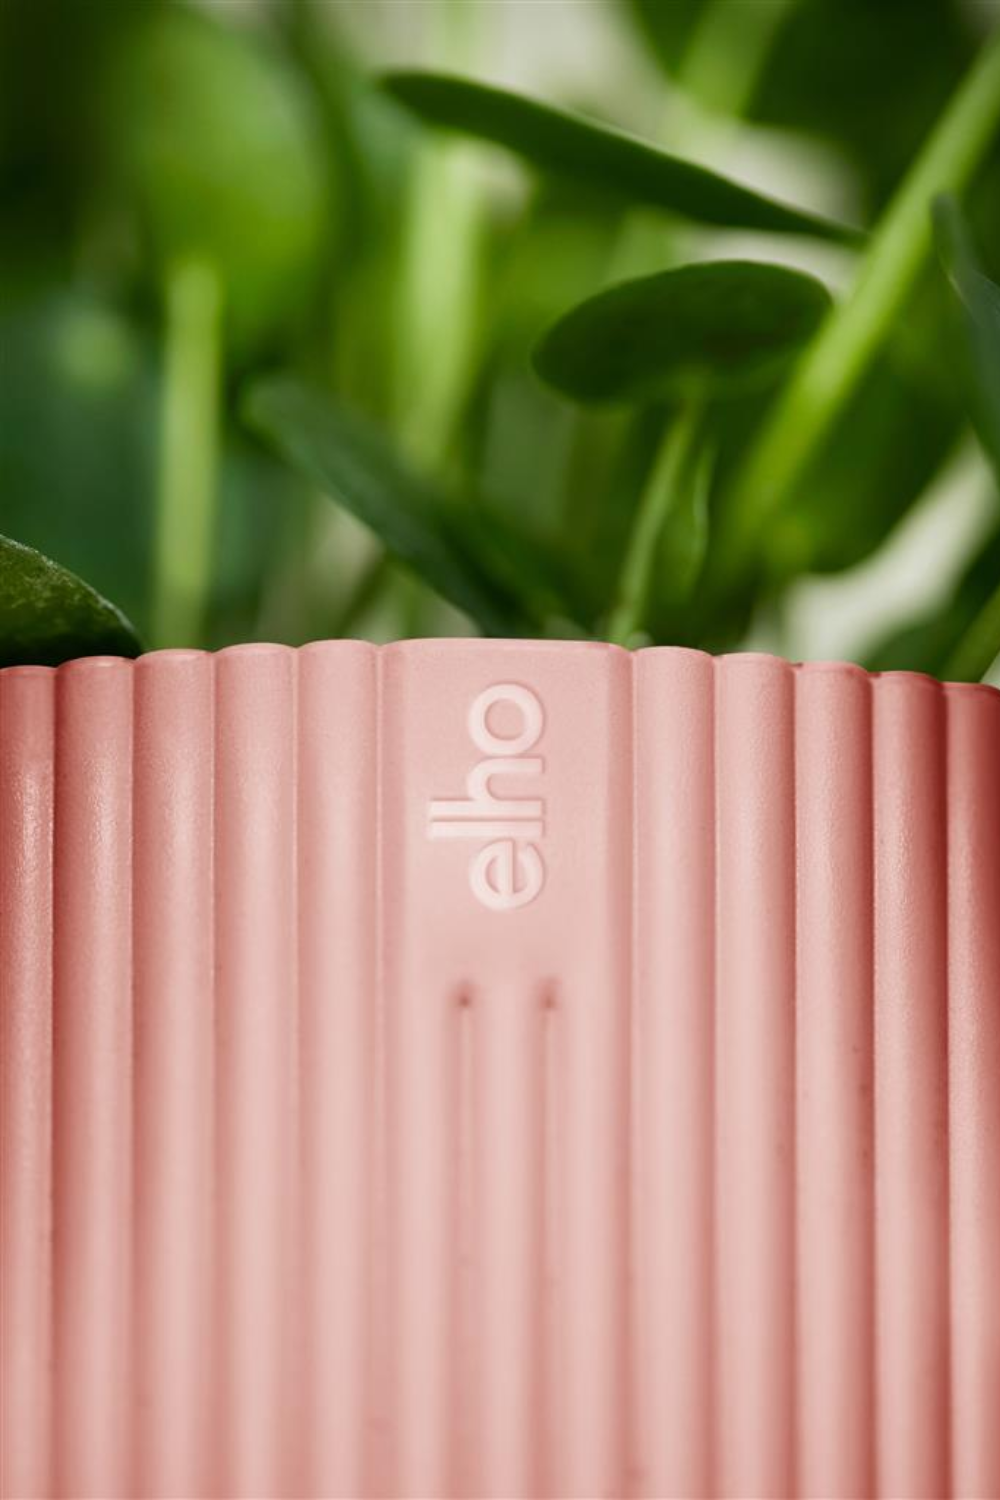 Bloempot Elho Vibes Fold rond 18 cm Delicate Pink